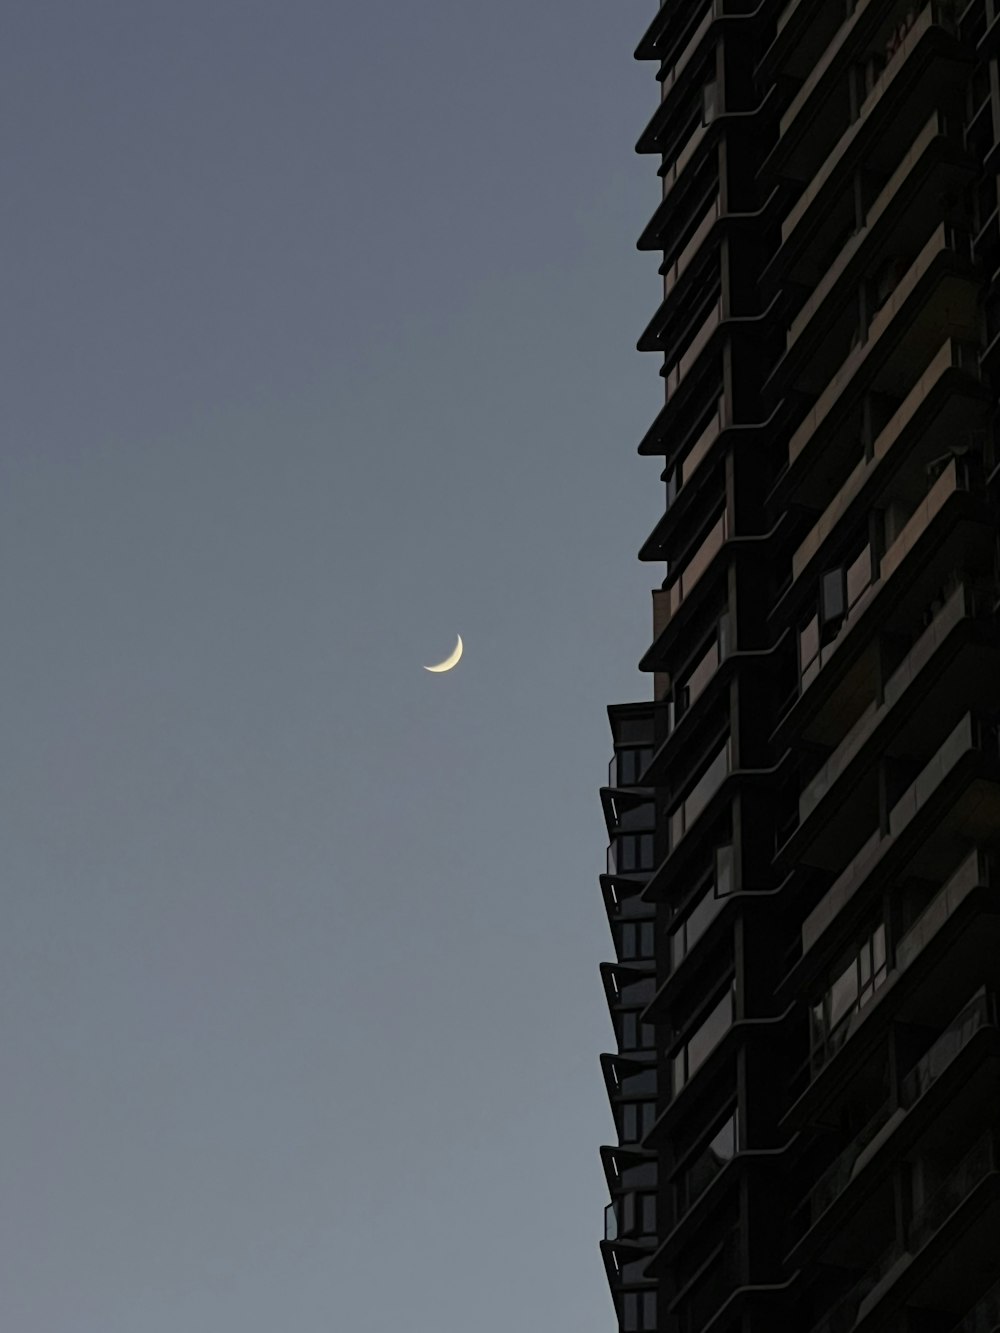 a half moon is seen in the sky between two buildings